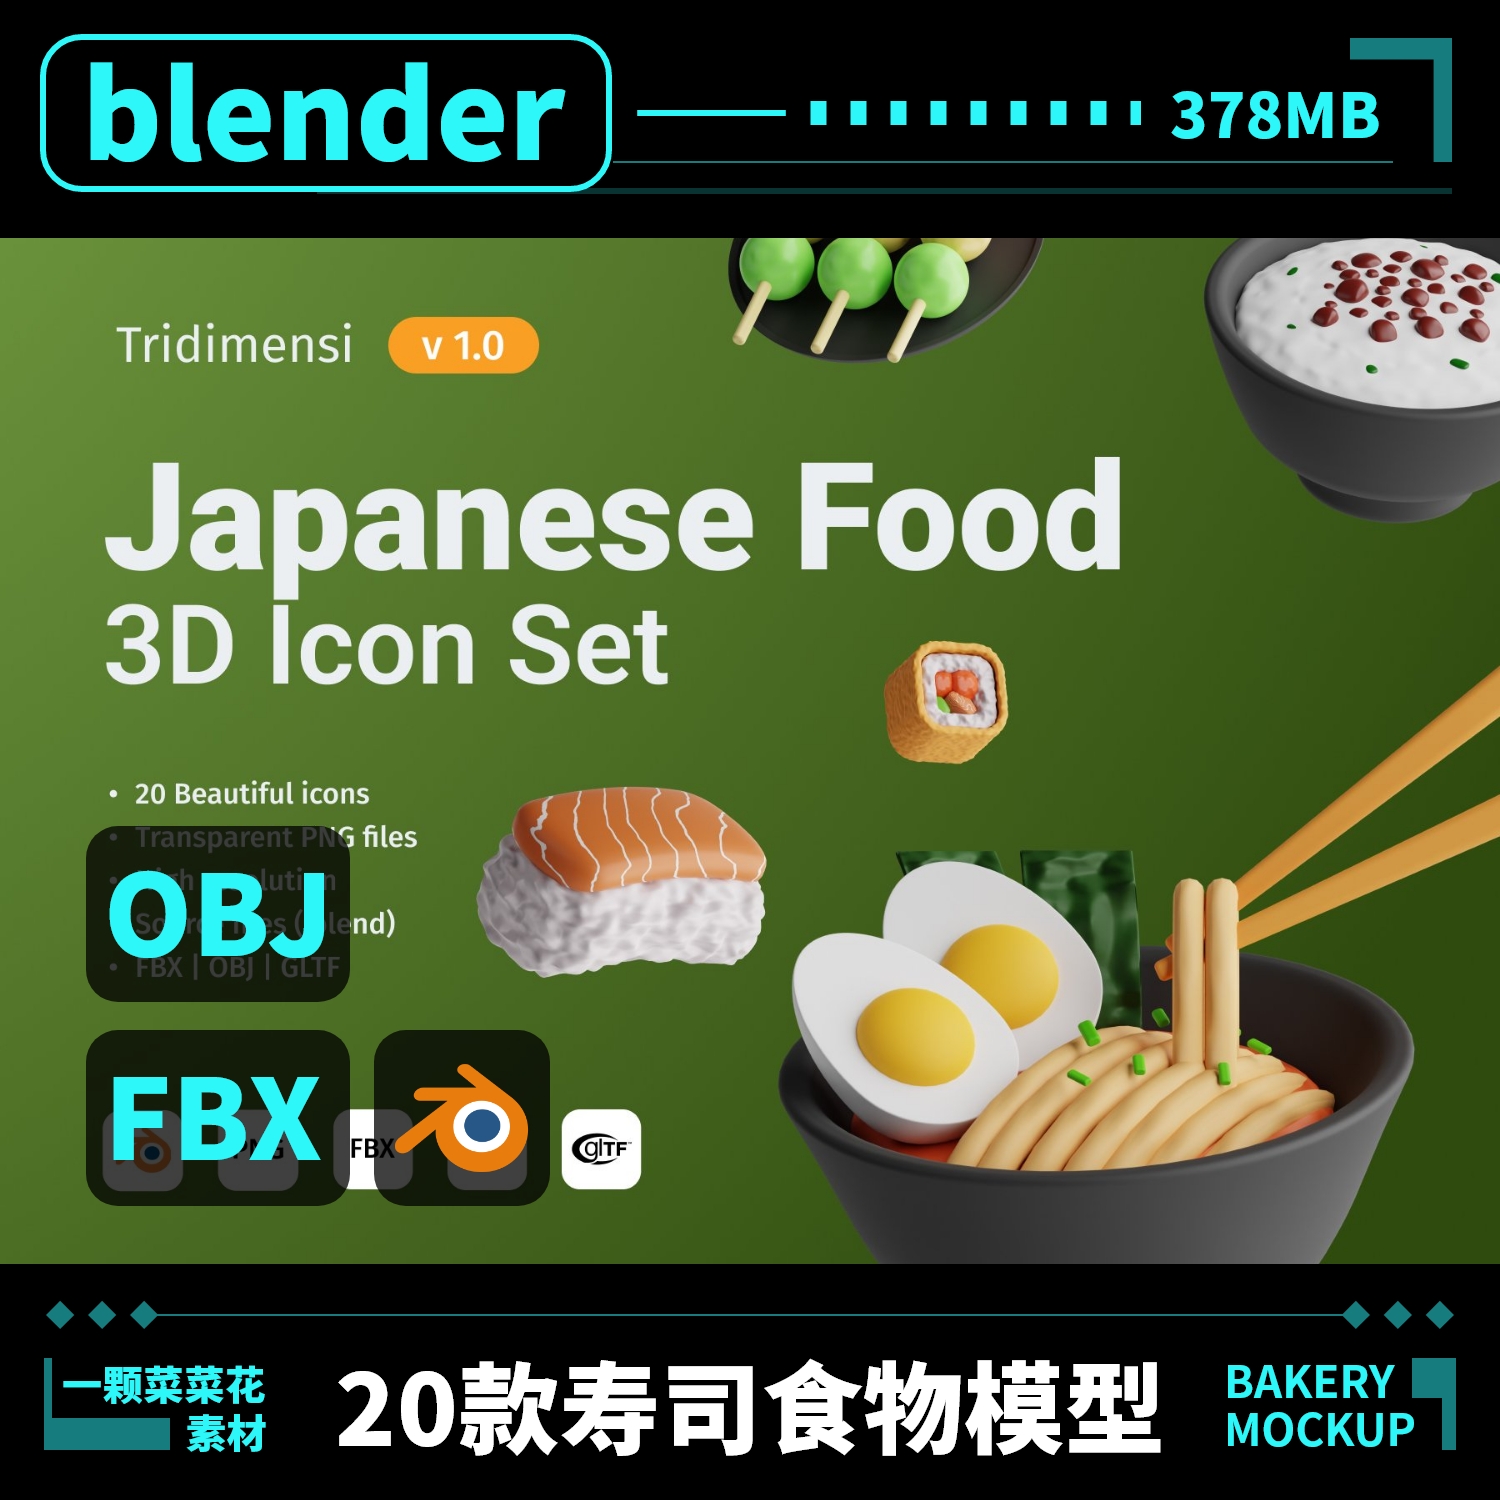 blender/obj/fbx寿司食物饭团米饭铜锣烧炸串3D图标模型素材 A149